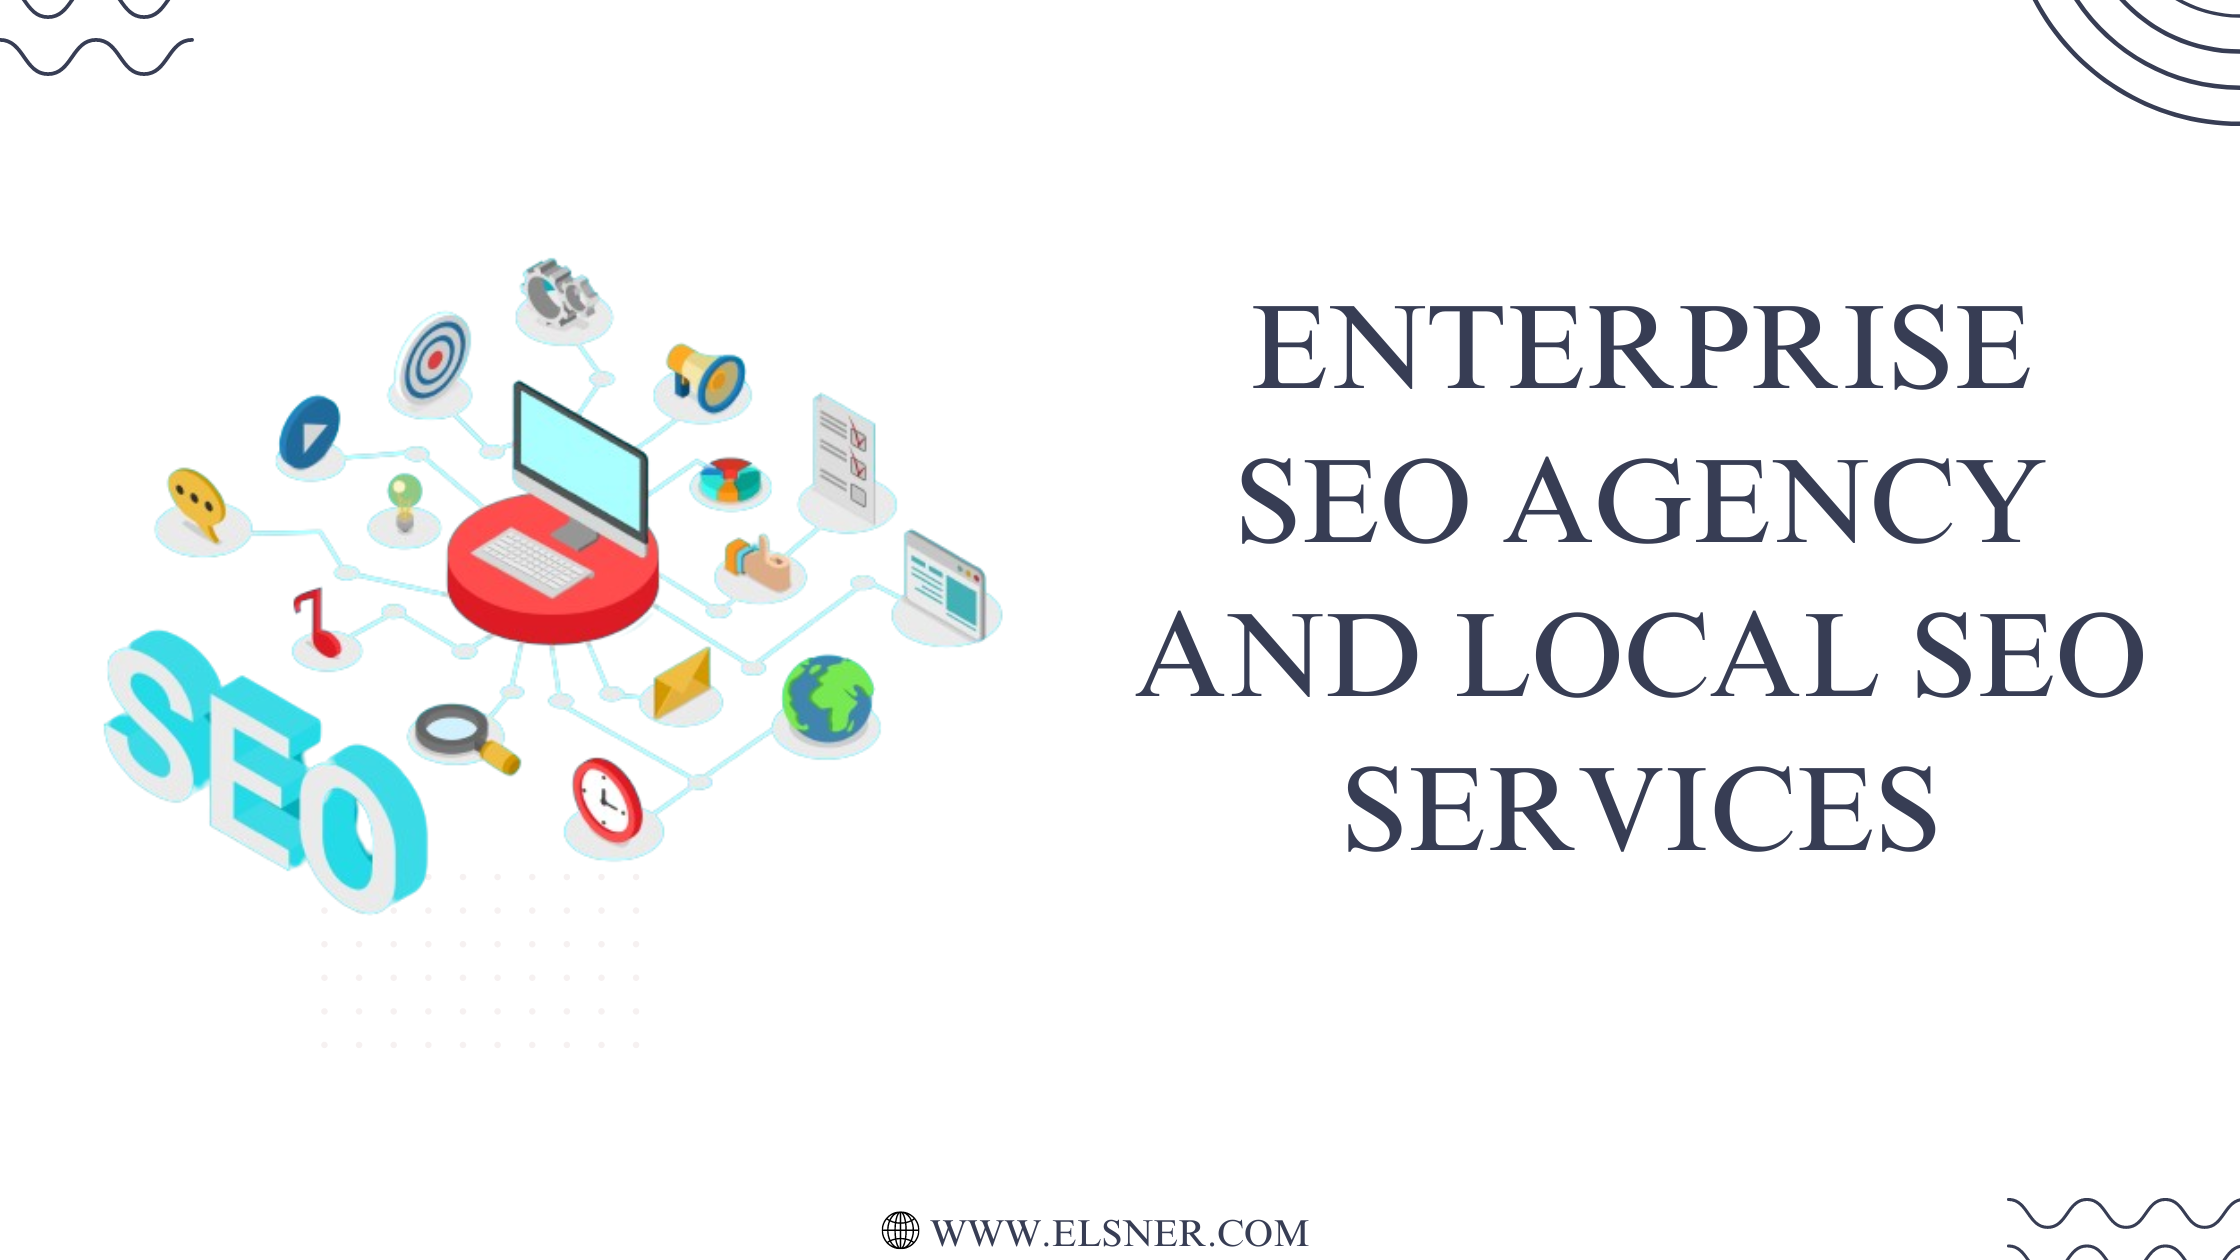 Enterprise SEO Agency and Local SEO Services: Vital Website Lifeline